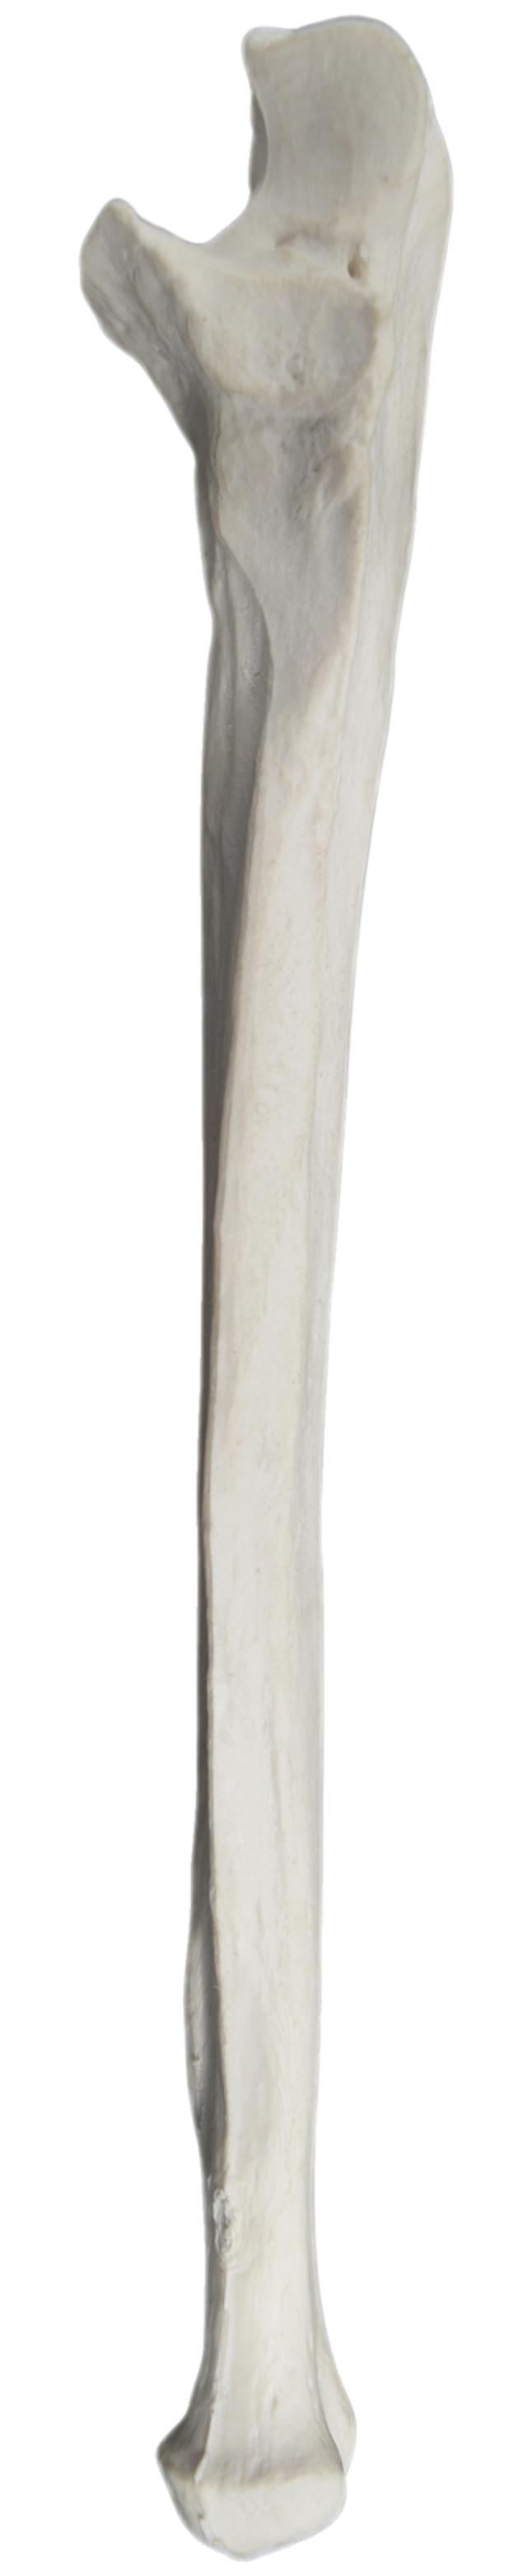 Eisco Labs Left Ulna Bone Model, 9 x 1-1/4 Inches